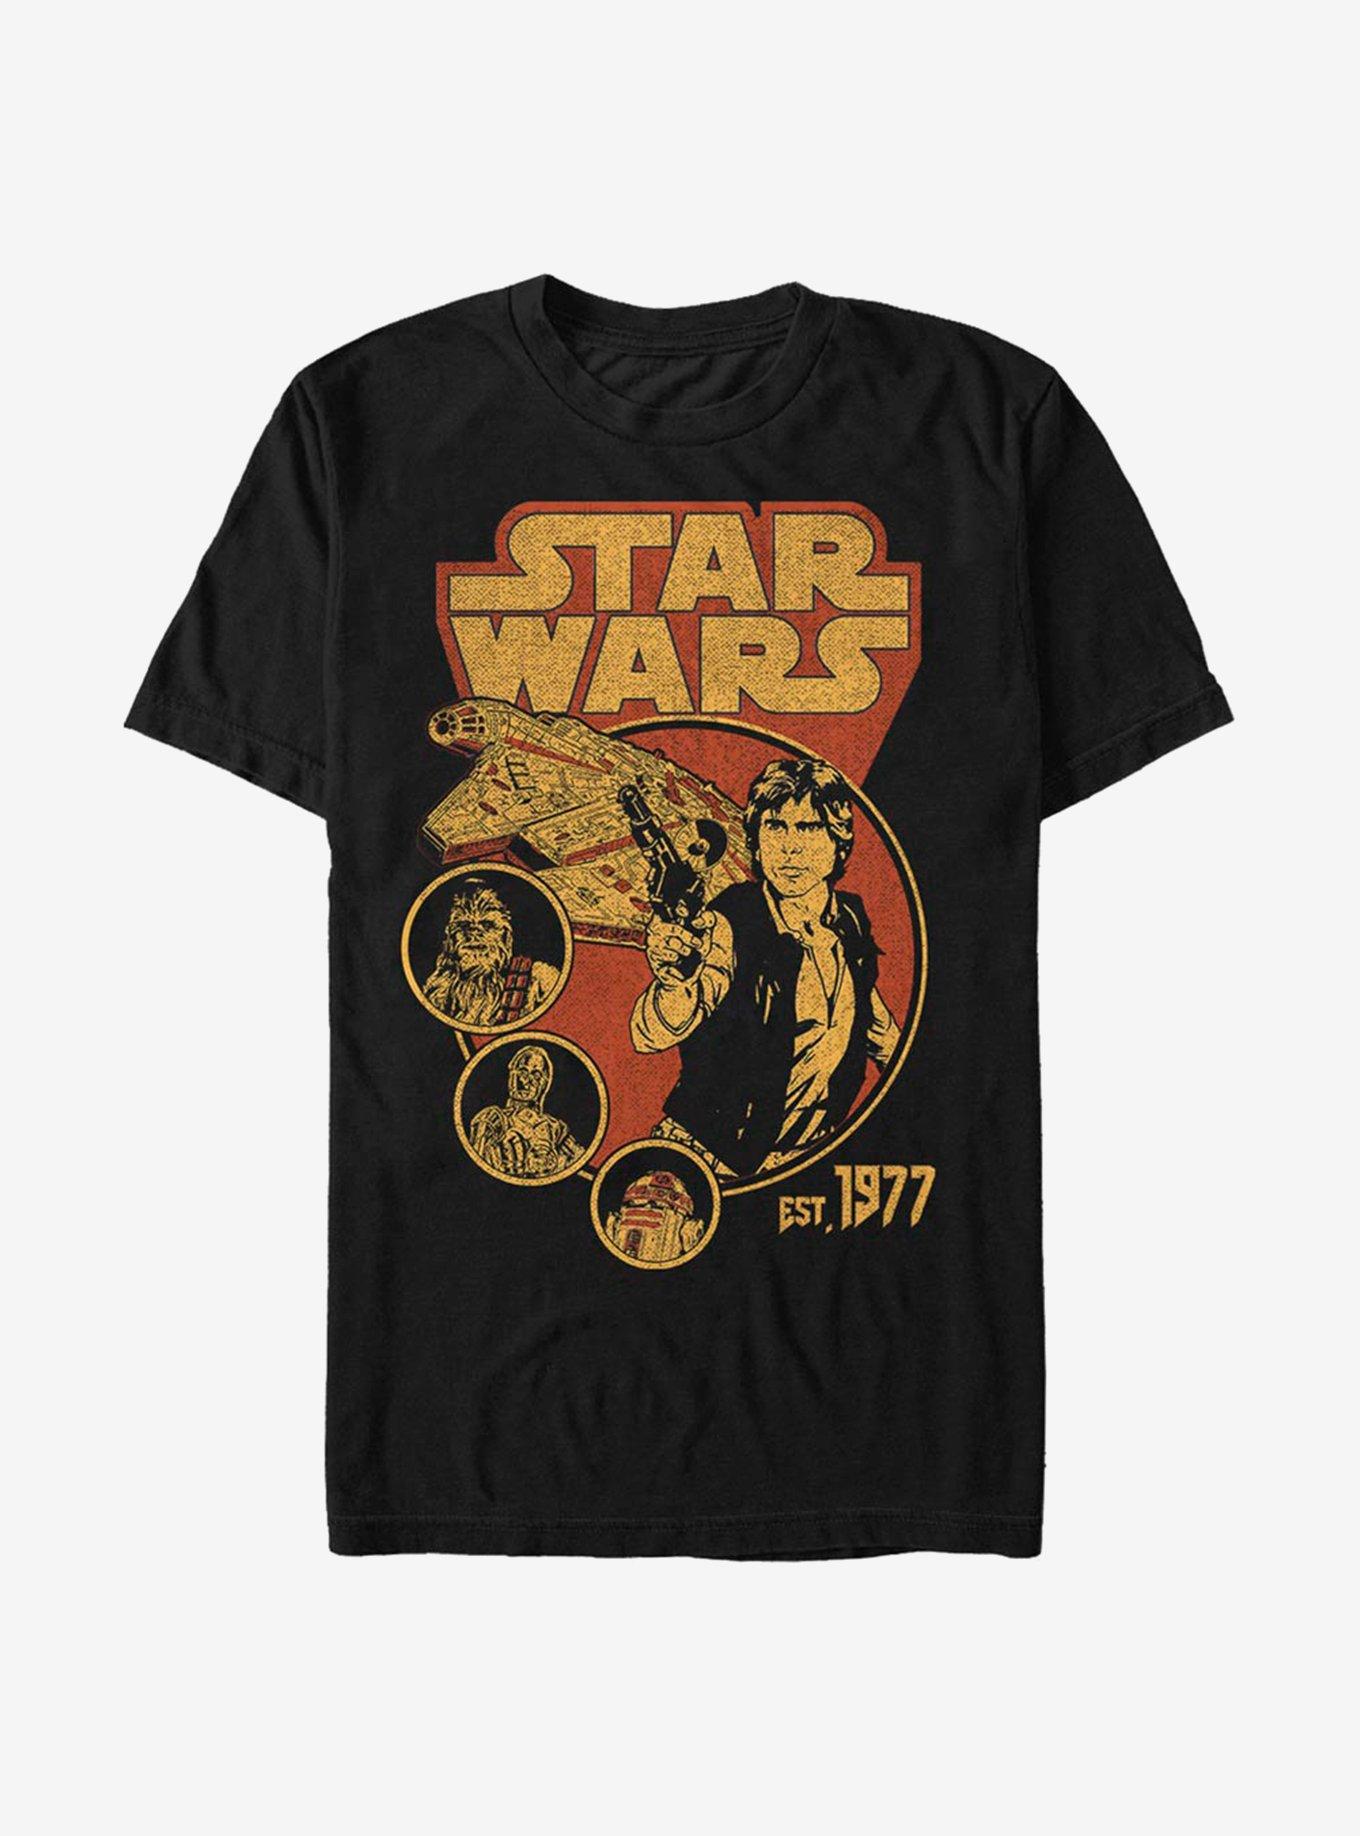 Star Wars EST. 1977 T-Shirt